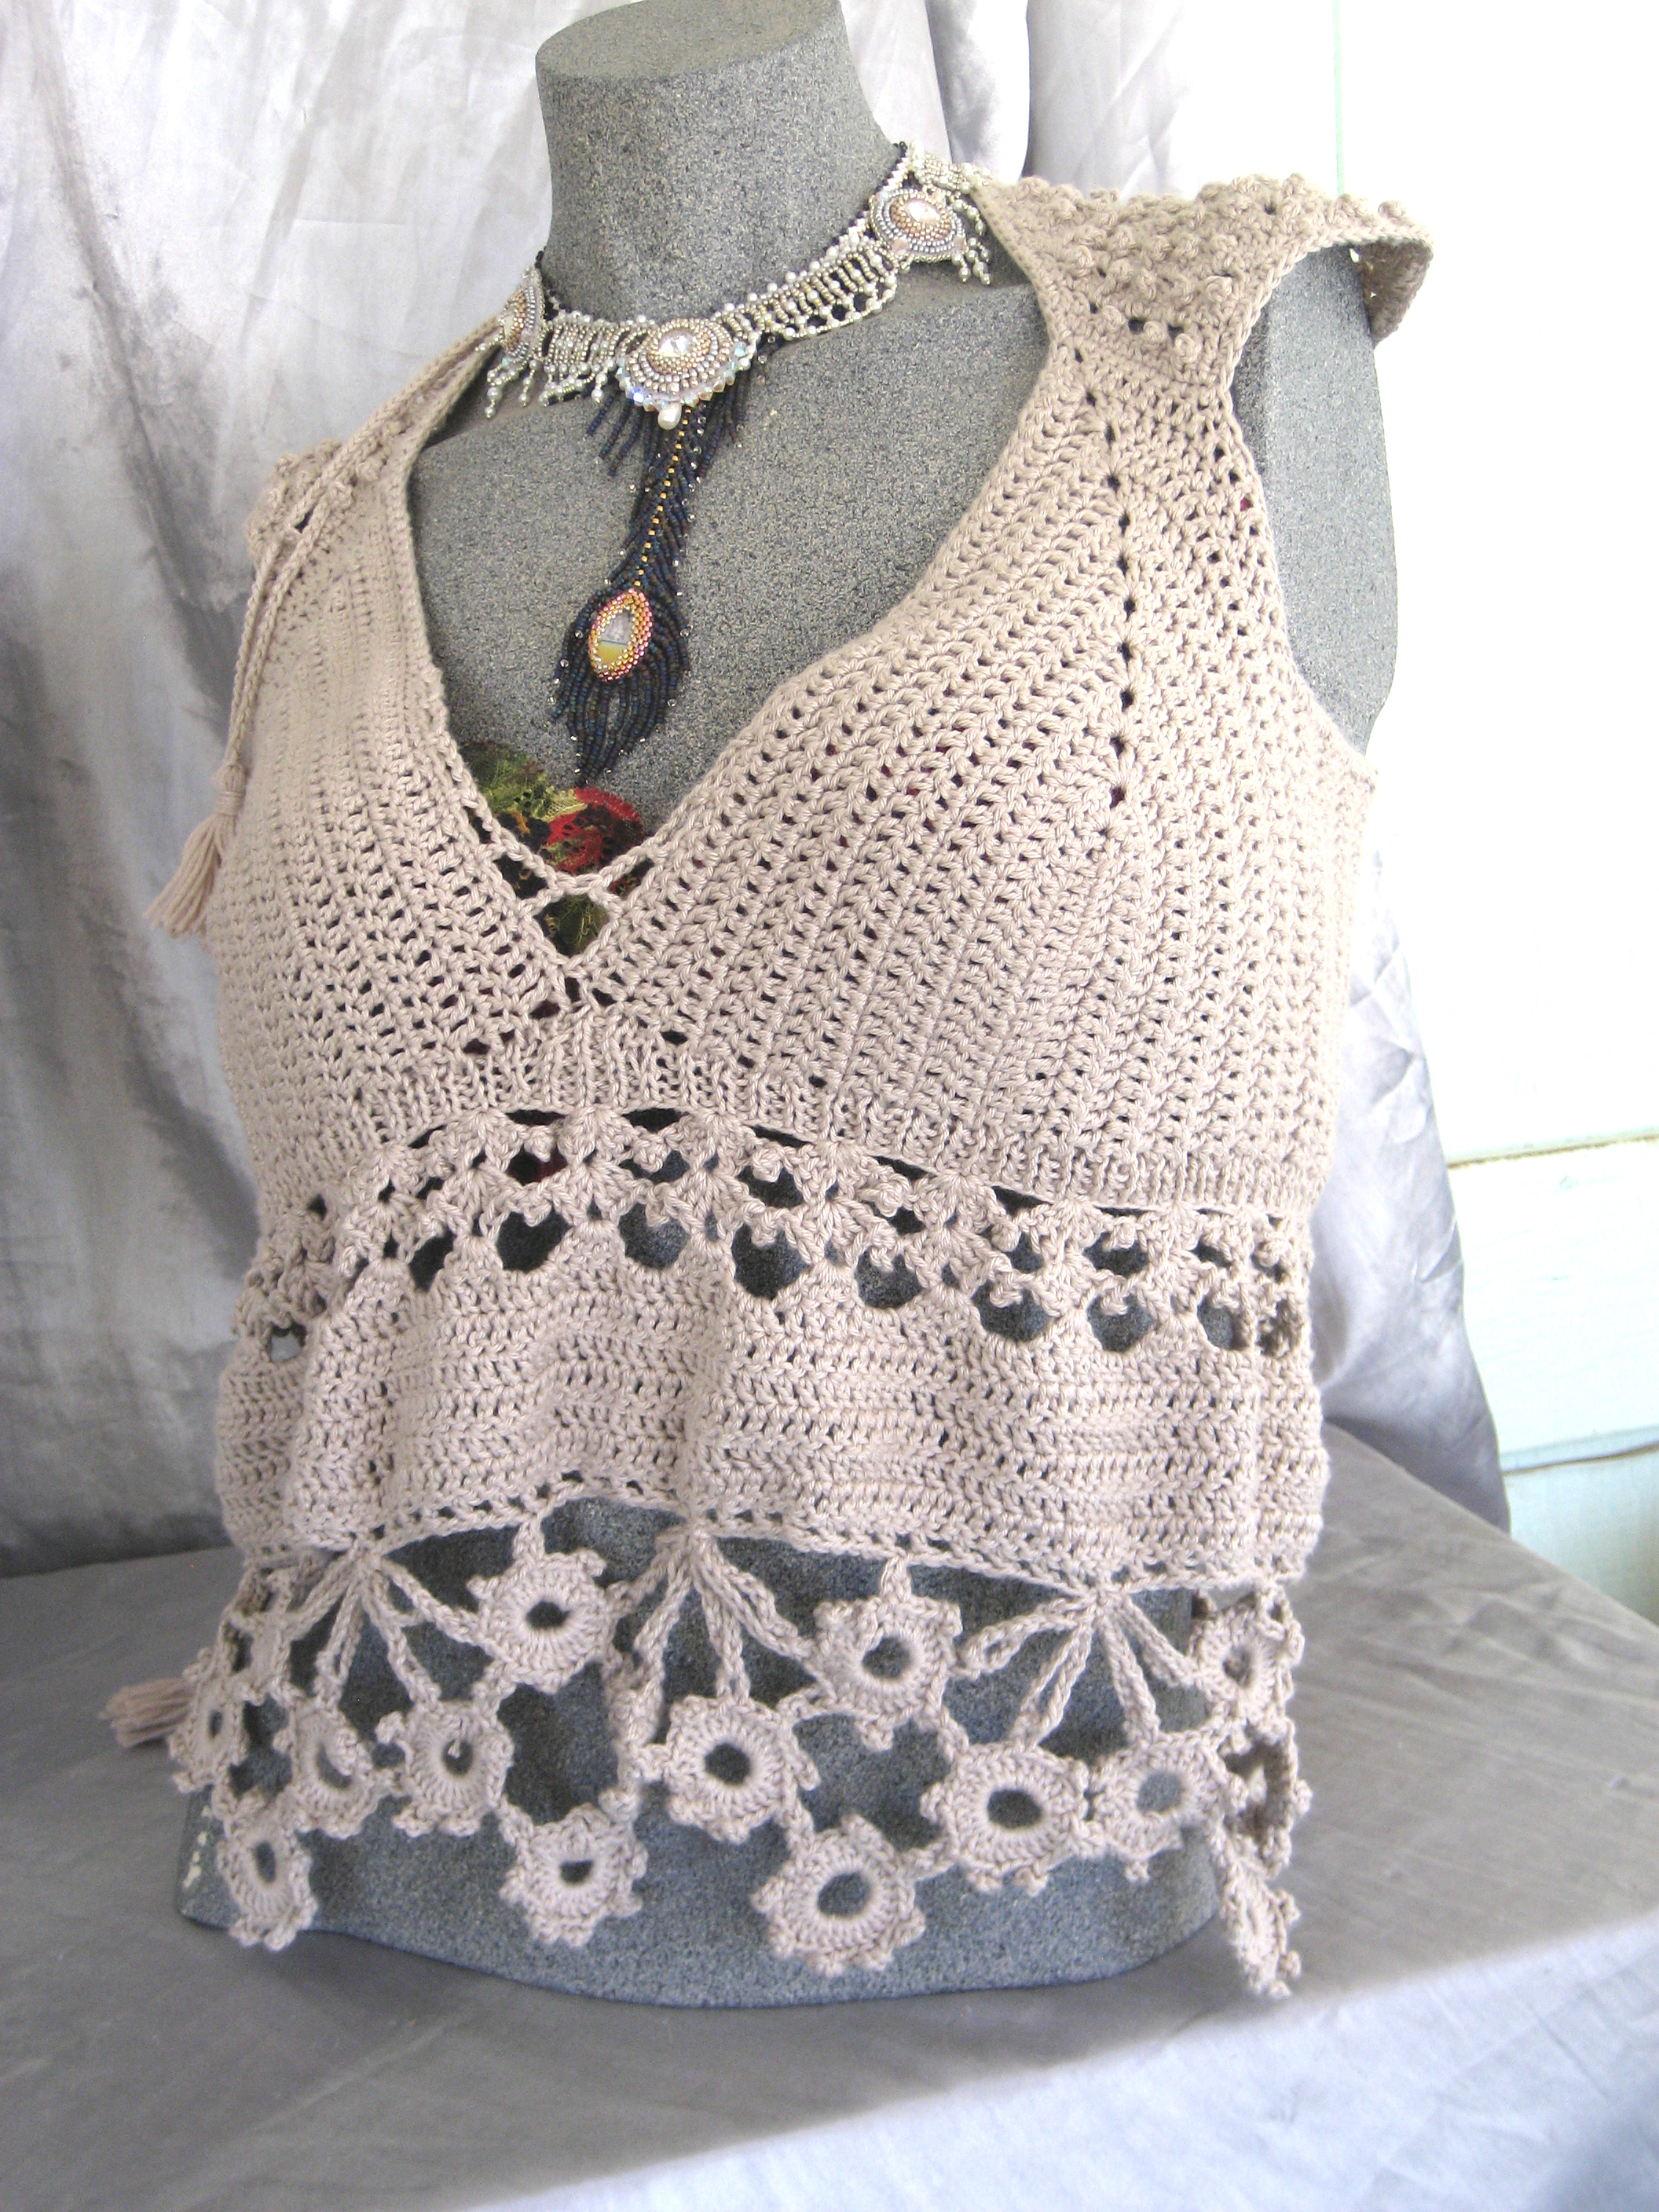 Hand crocheted saree style halter top by Bonnie Van Hall